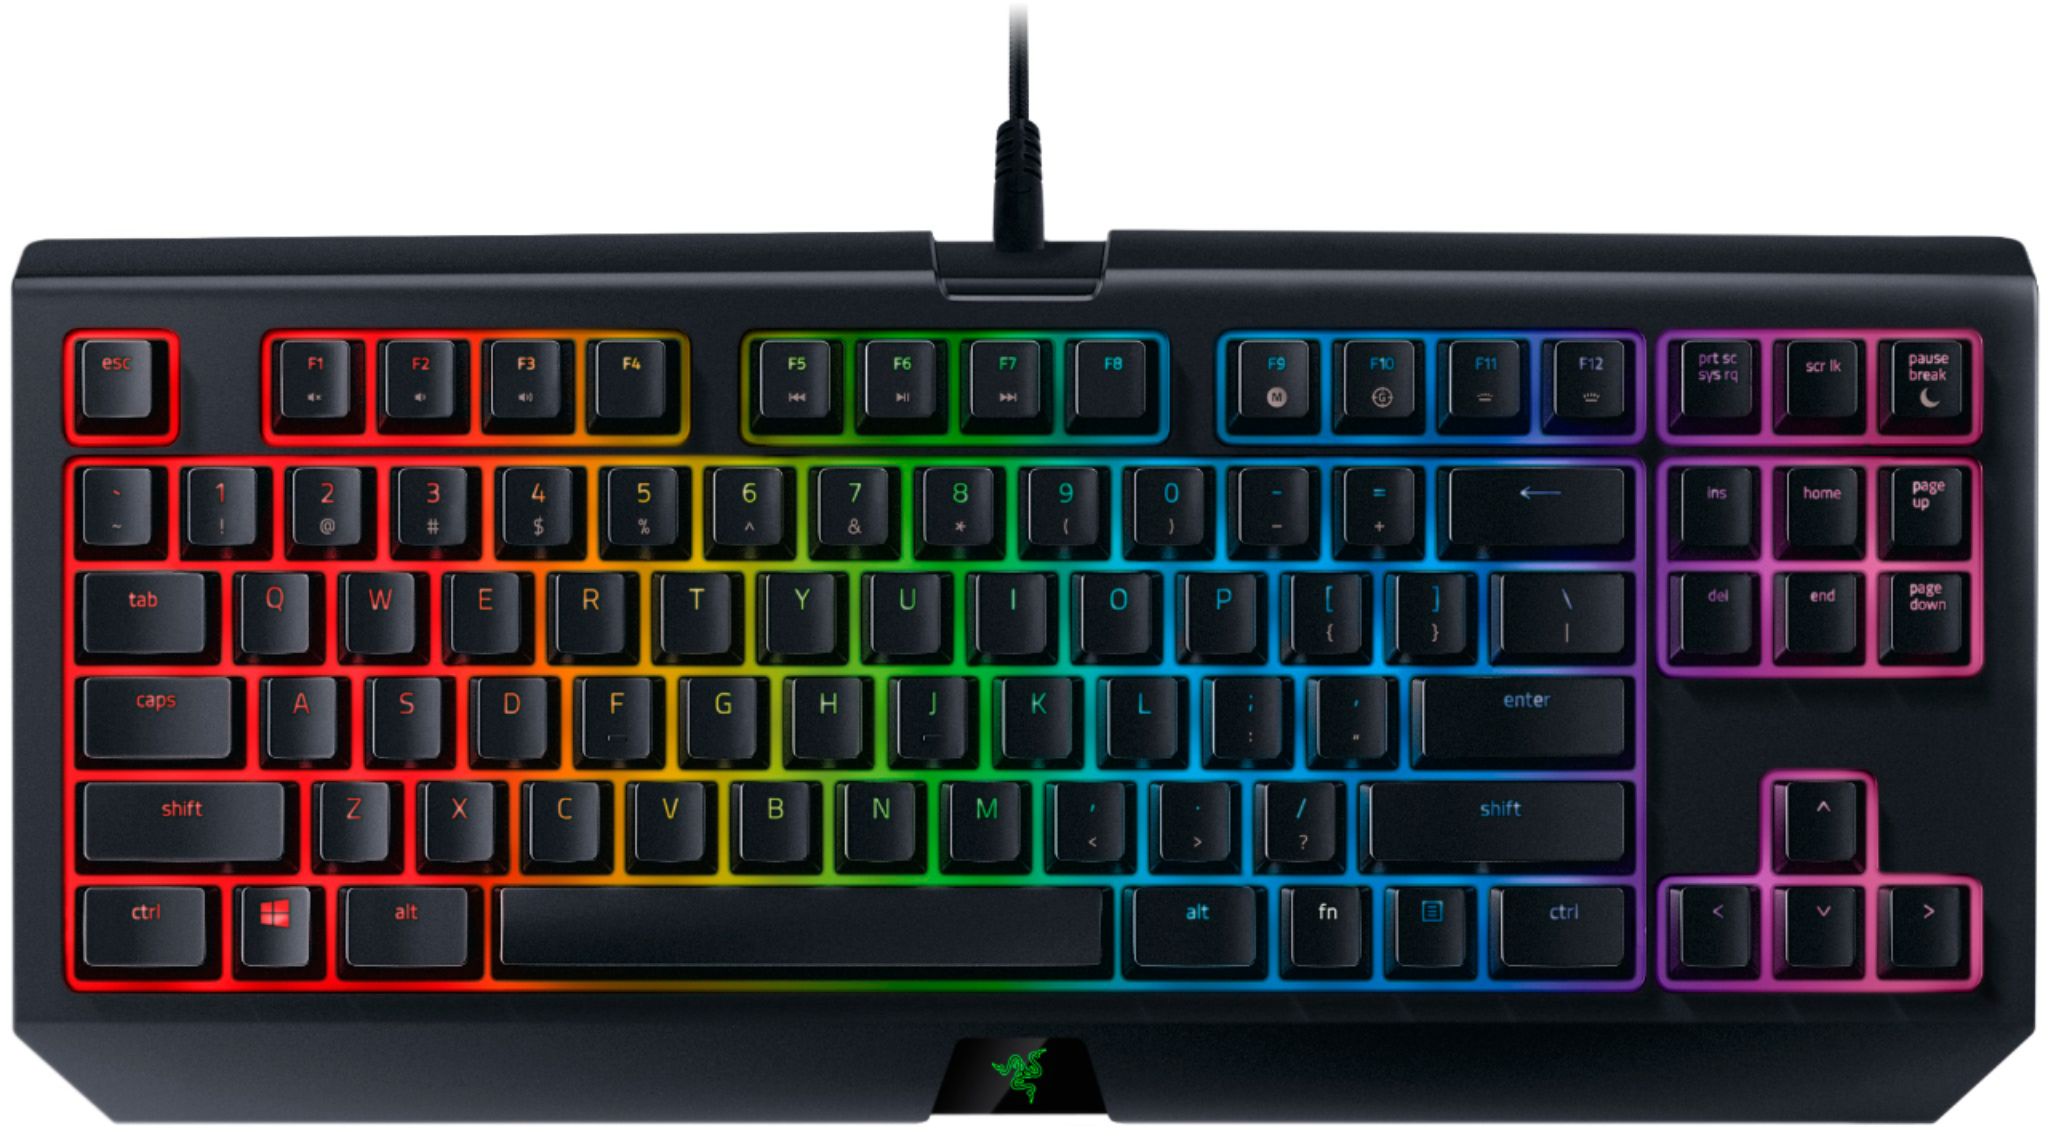 Razer - BlackWidow Chroma V2 Tournament Edition Wired Gaming Mechanical Switch Keyboard with RGB Back Lighting - Black